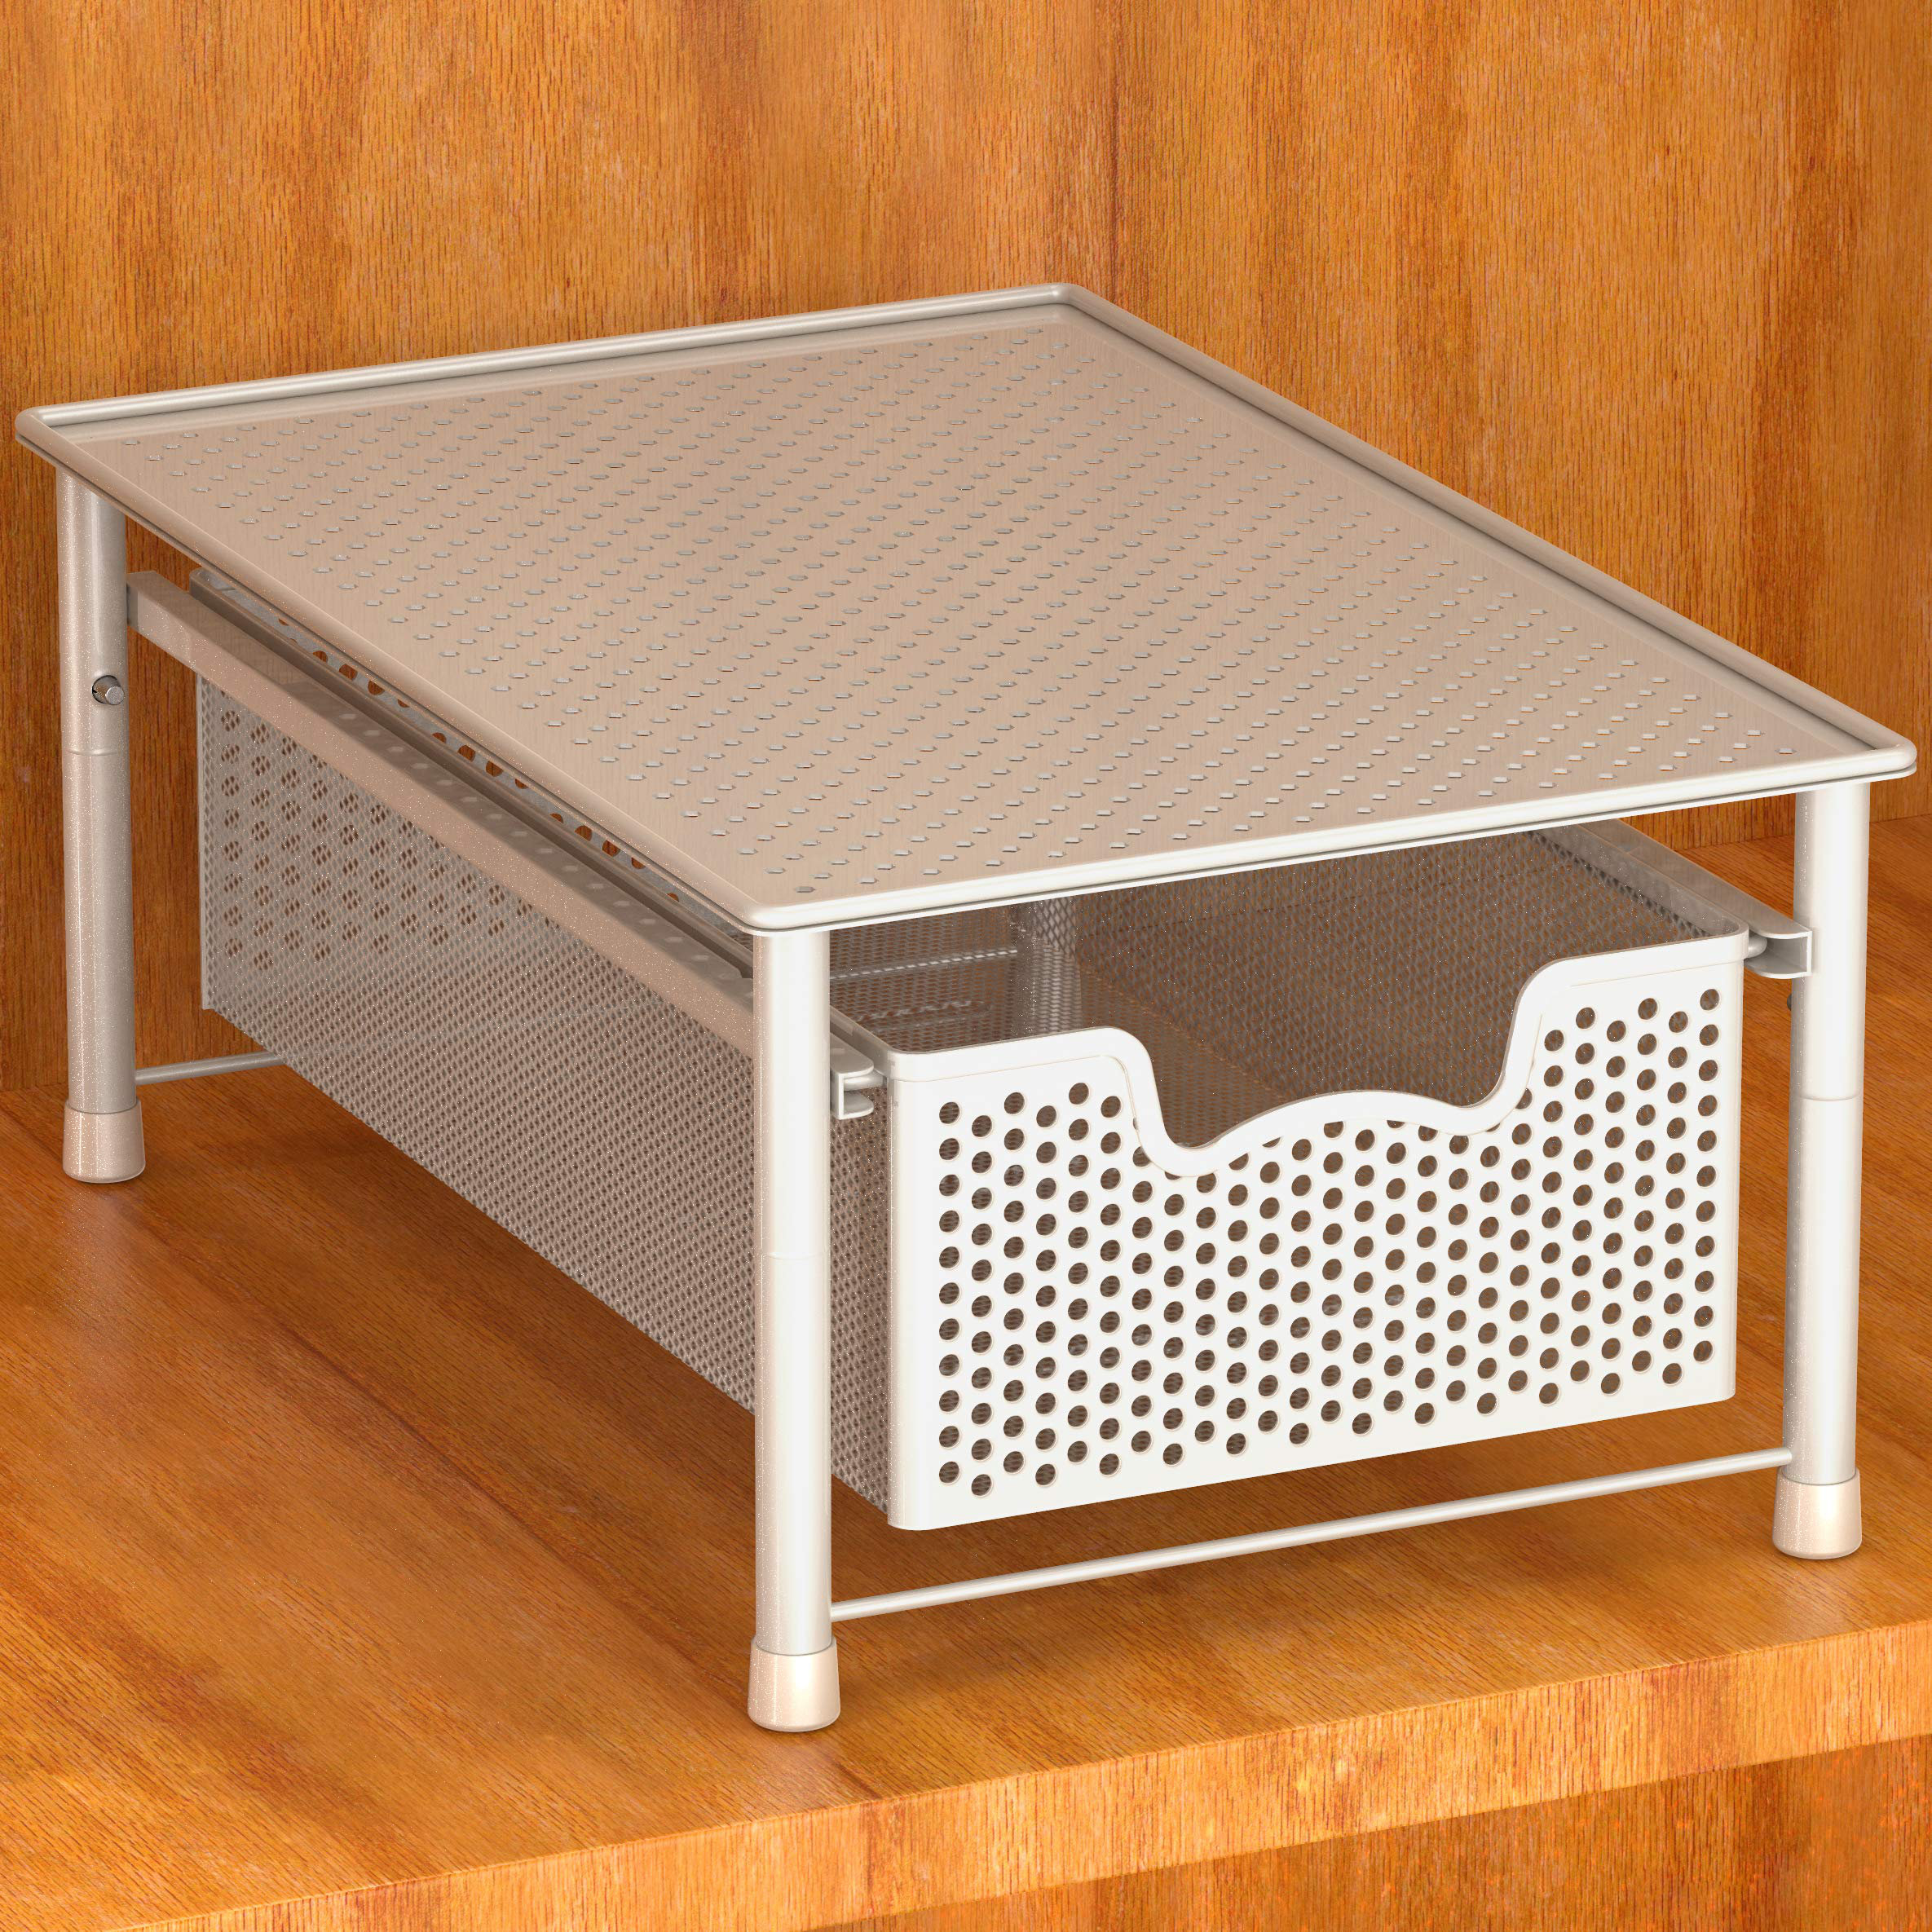 Simple Houseware Stackable 3 Tier Sliding Basket Organizer Drawer